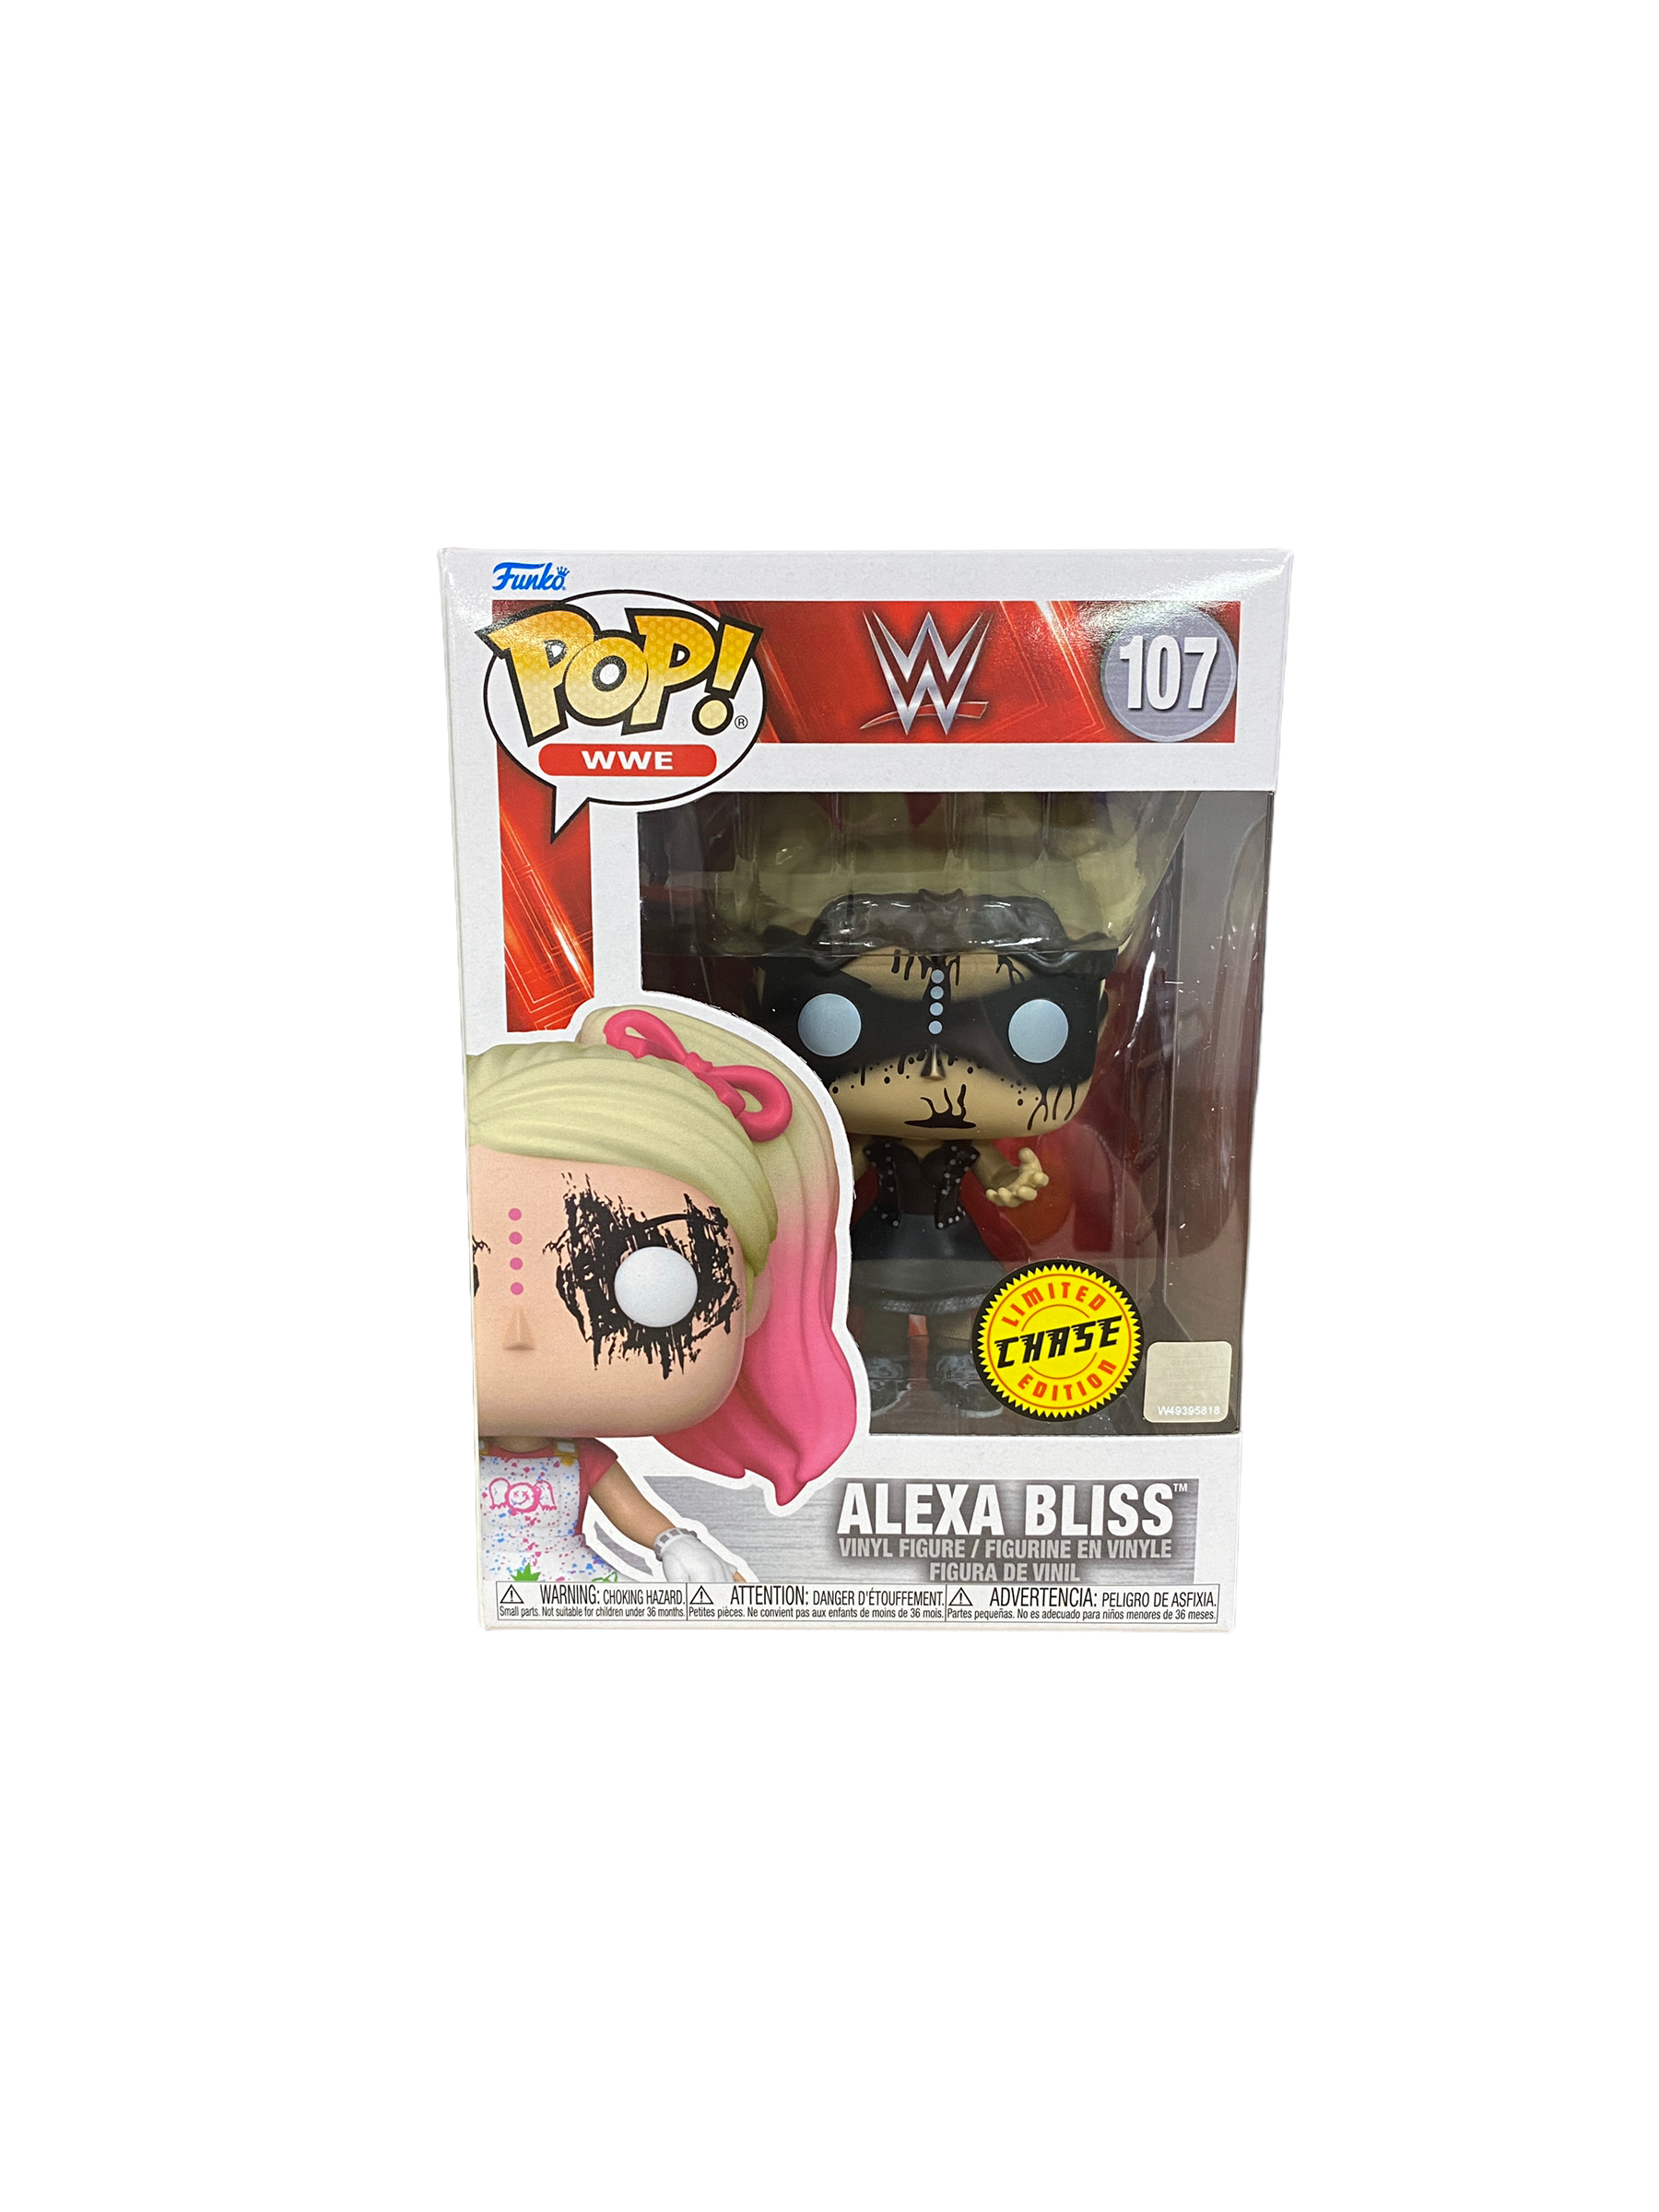 Alexa Bliss #107 (Chase) Funko Pop! - WWE - 2022 Pop! - Condition 9.5+/10